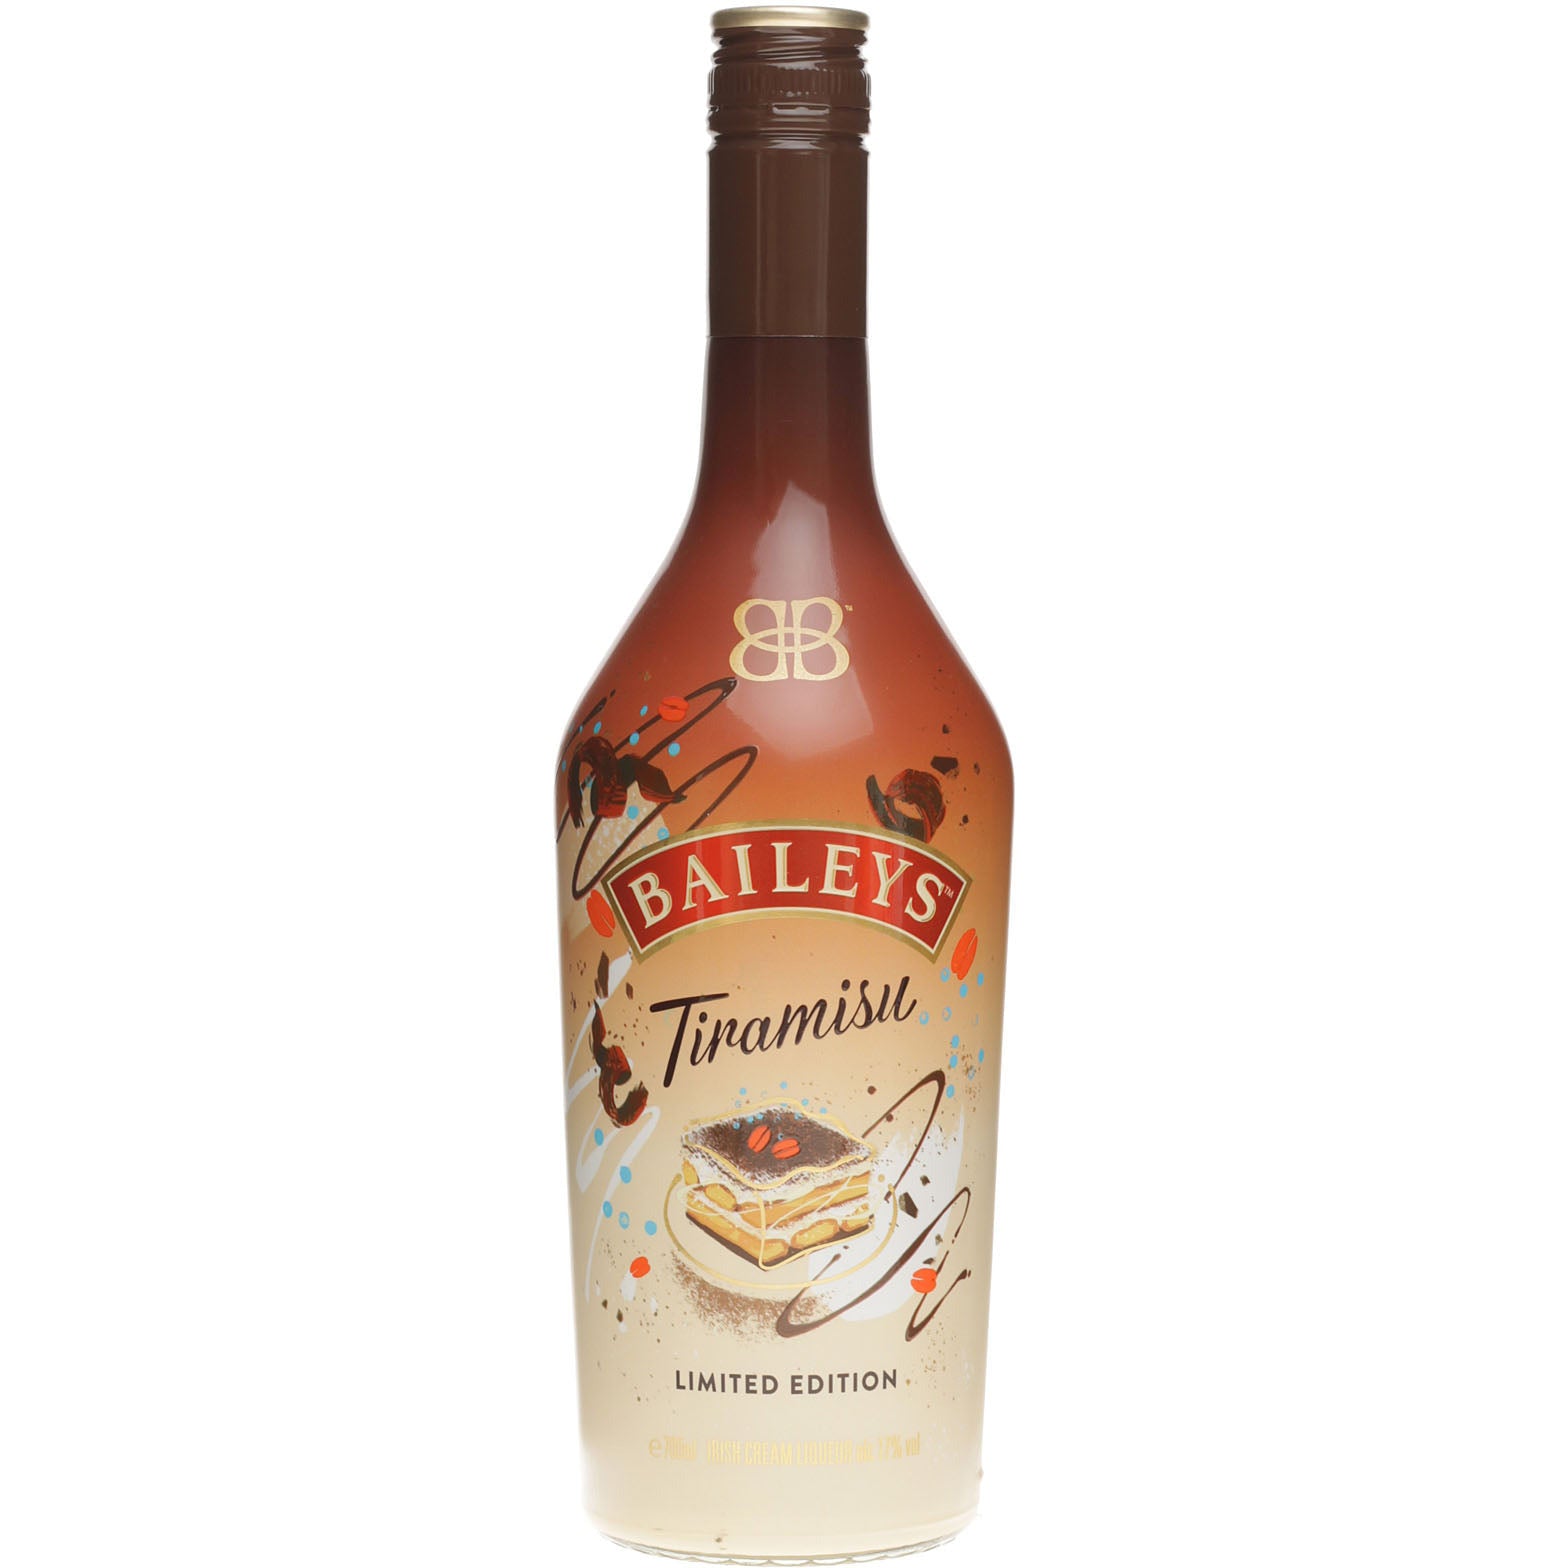 Baileys Tiramisu Irish Cream Liqueur Limited Edition 17% Vol. 0,7l